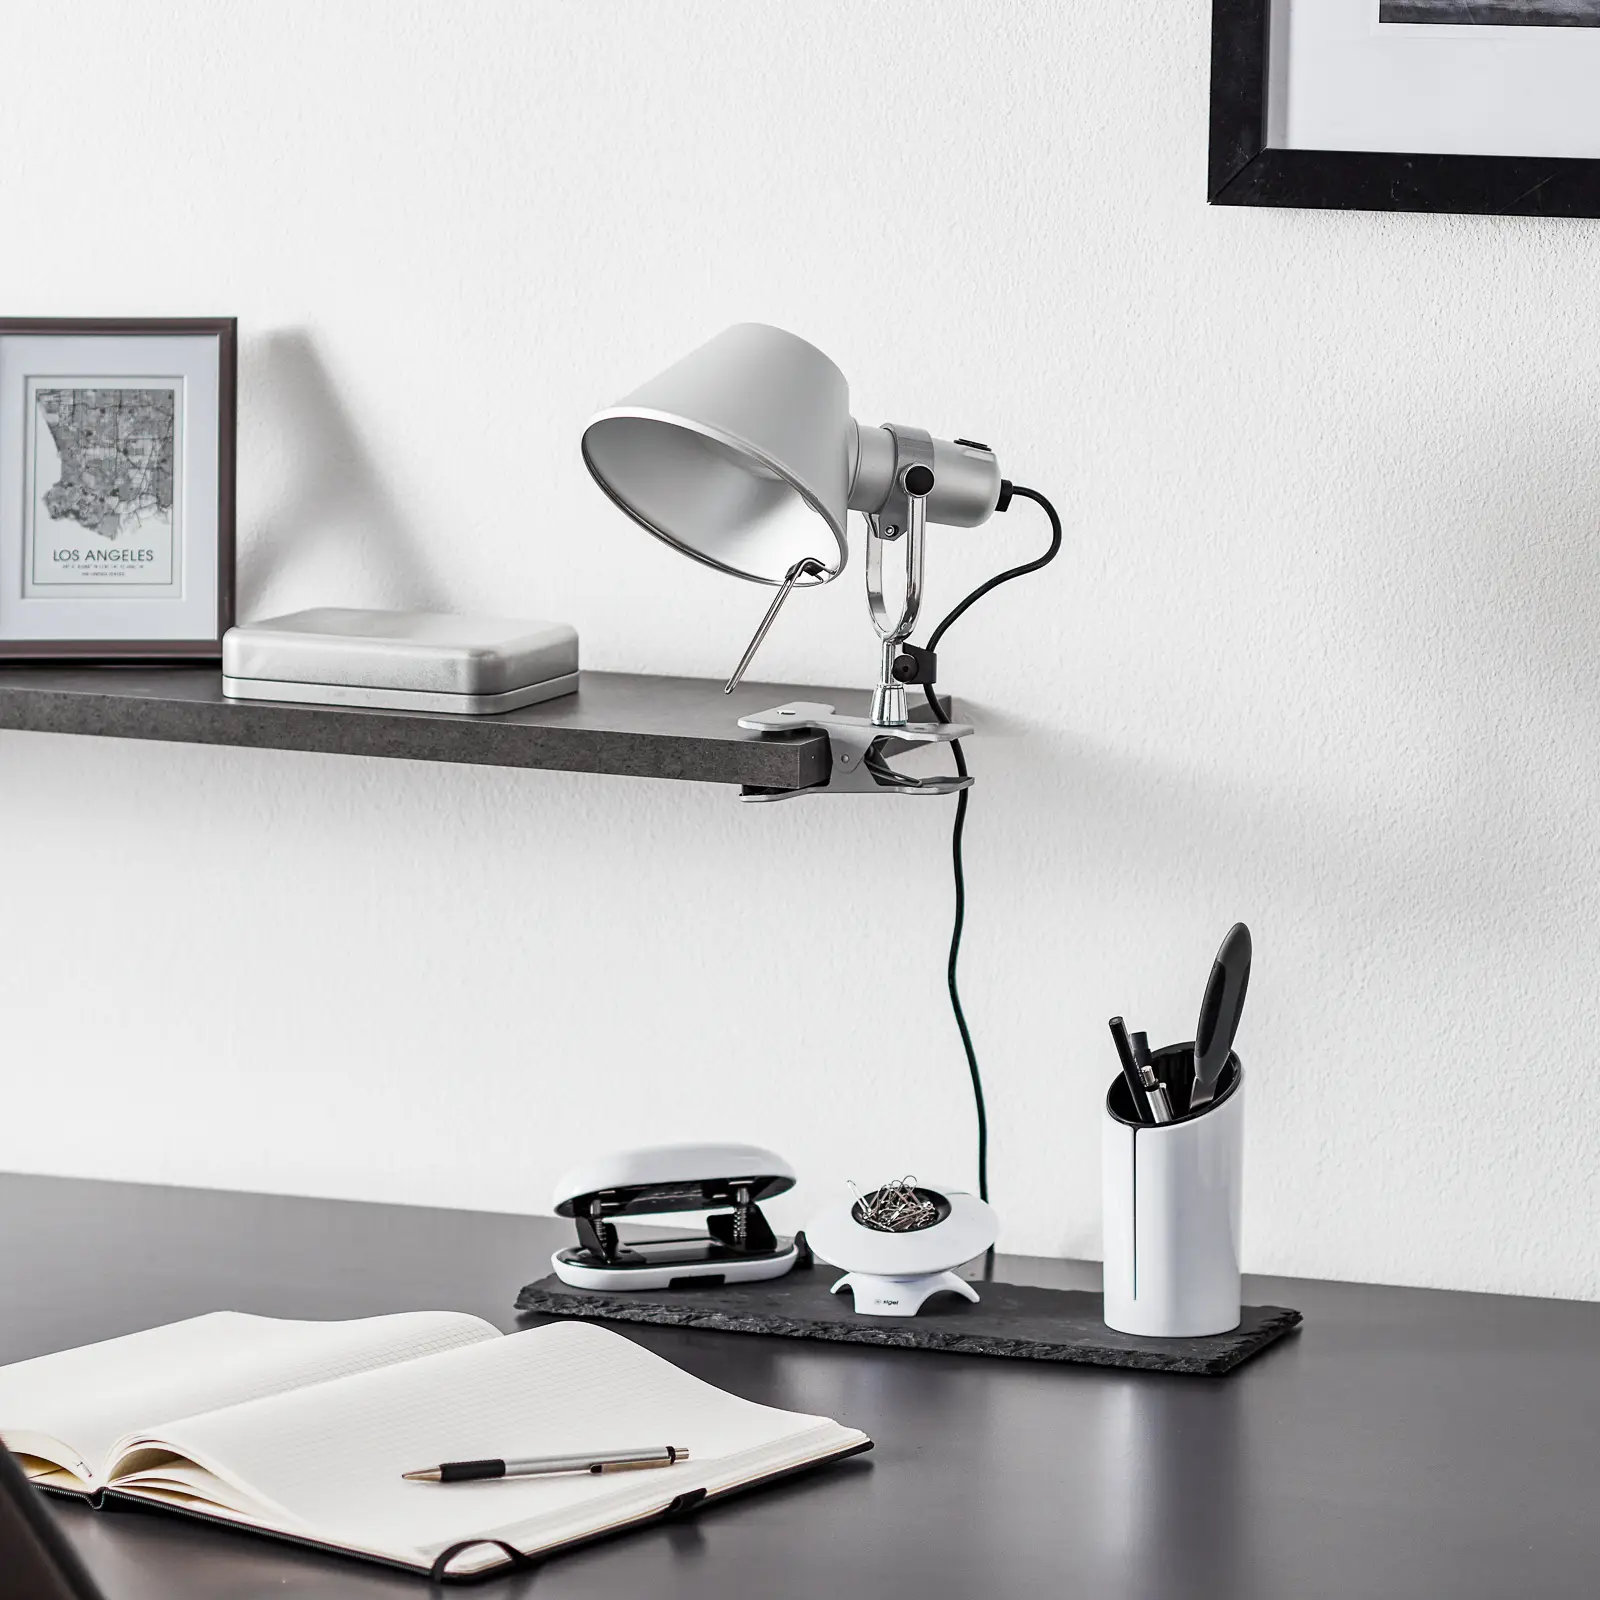 Artemide Tolomeo Classic LED Clip Spot Table Lamp by Michele De Lucchi & Fassina | Wayfair